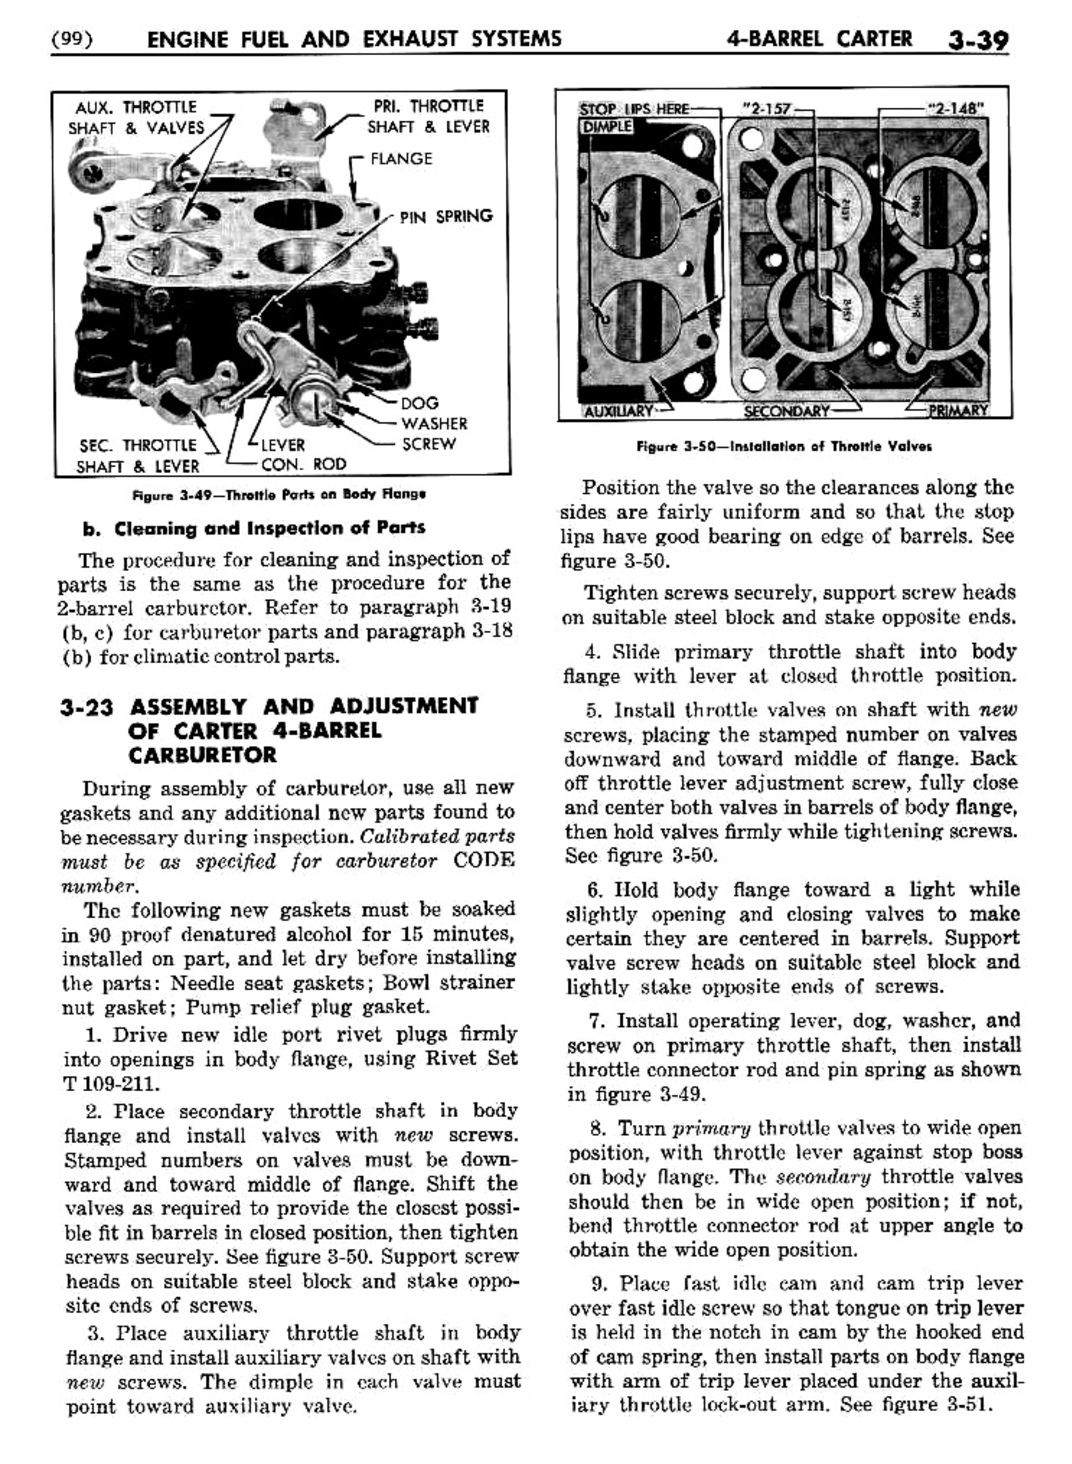 n_04 1954 Buick Shop Manual - Engine Fuel & Exhaust-039-039.jpg